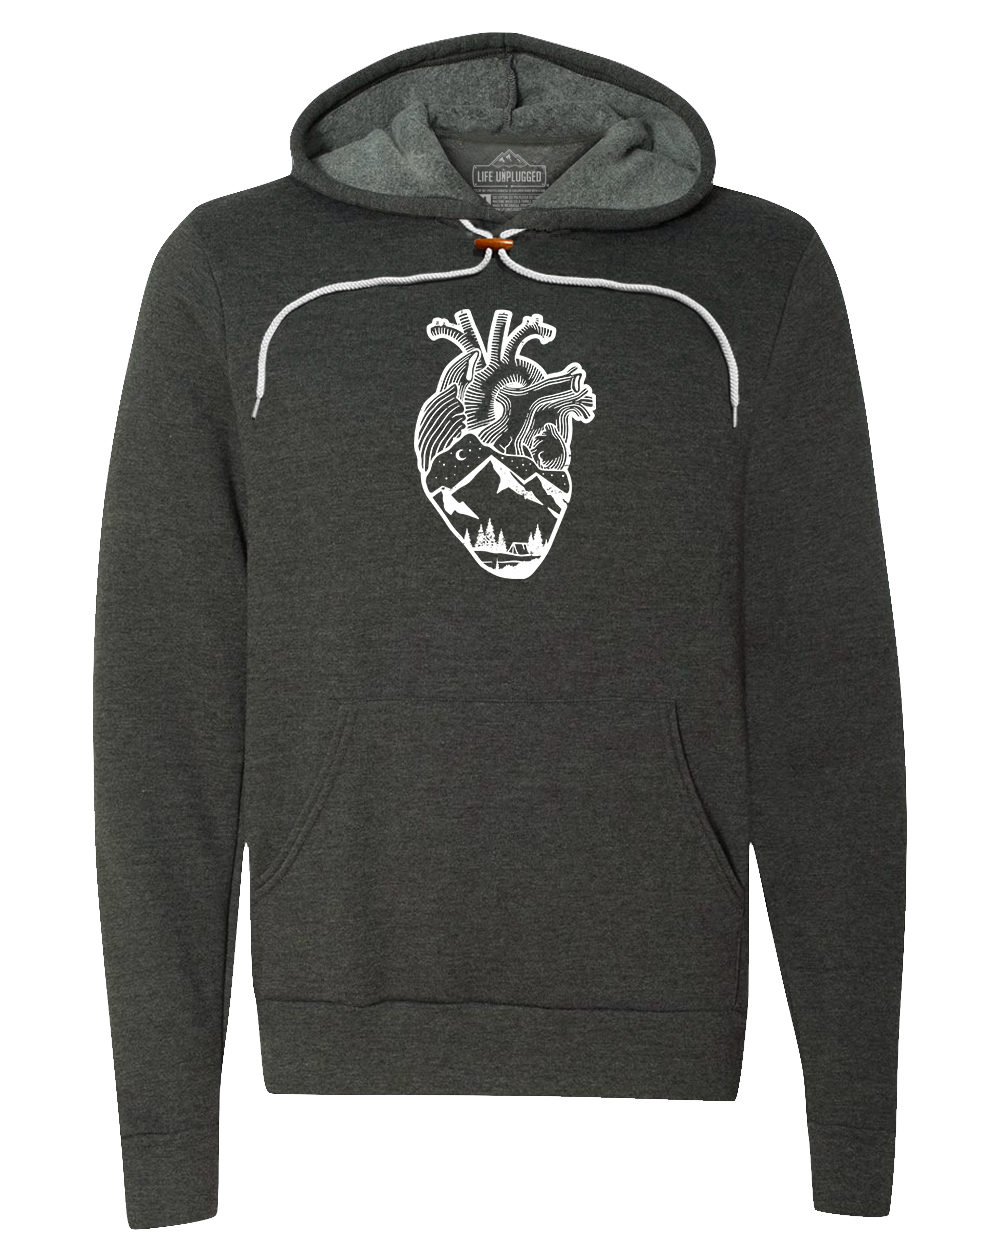 Anatomical Heart (Full Chest) Premium Super Soft Hooded Sweatshirt